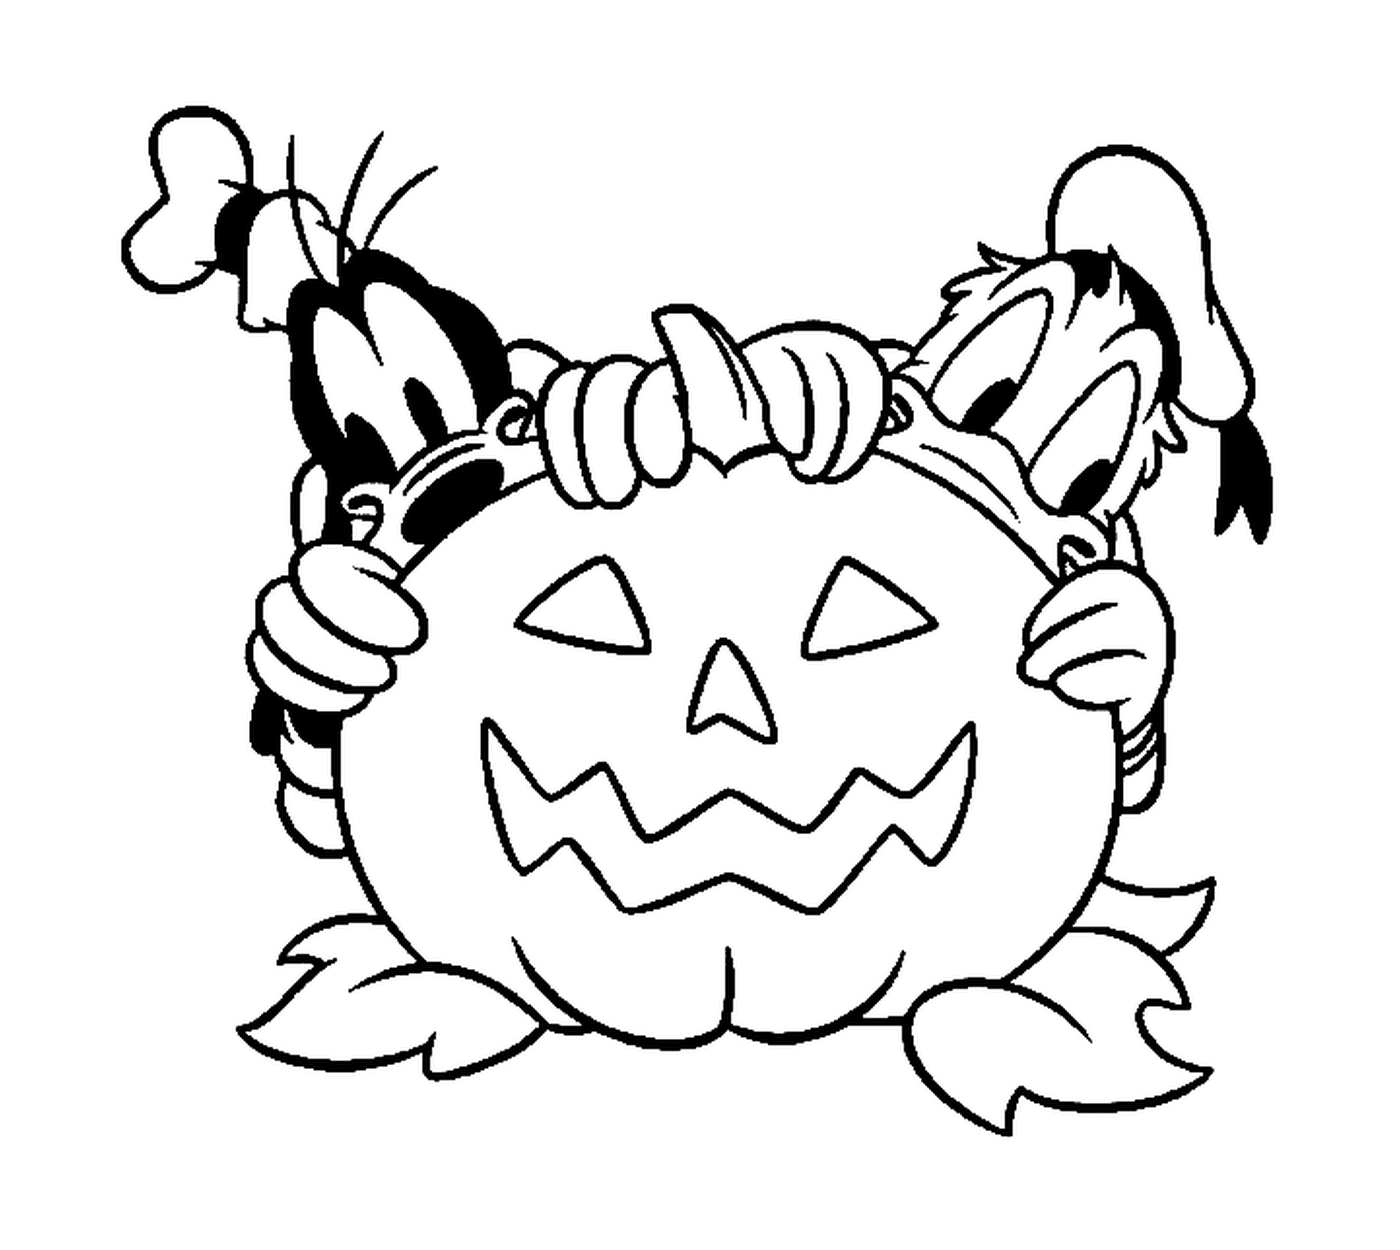  Donald and Dingo hiding behind a Halloween pumpkin 